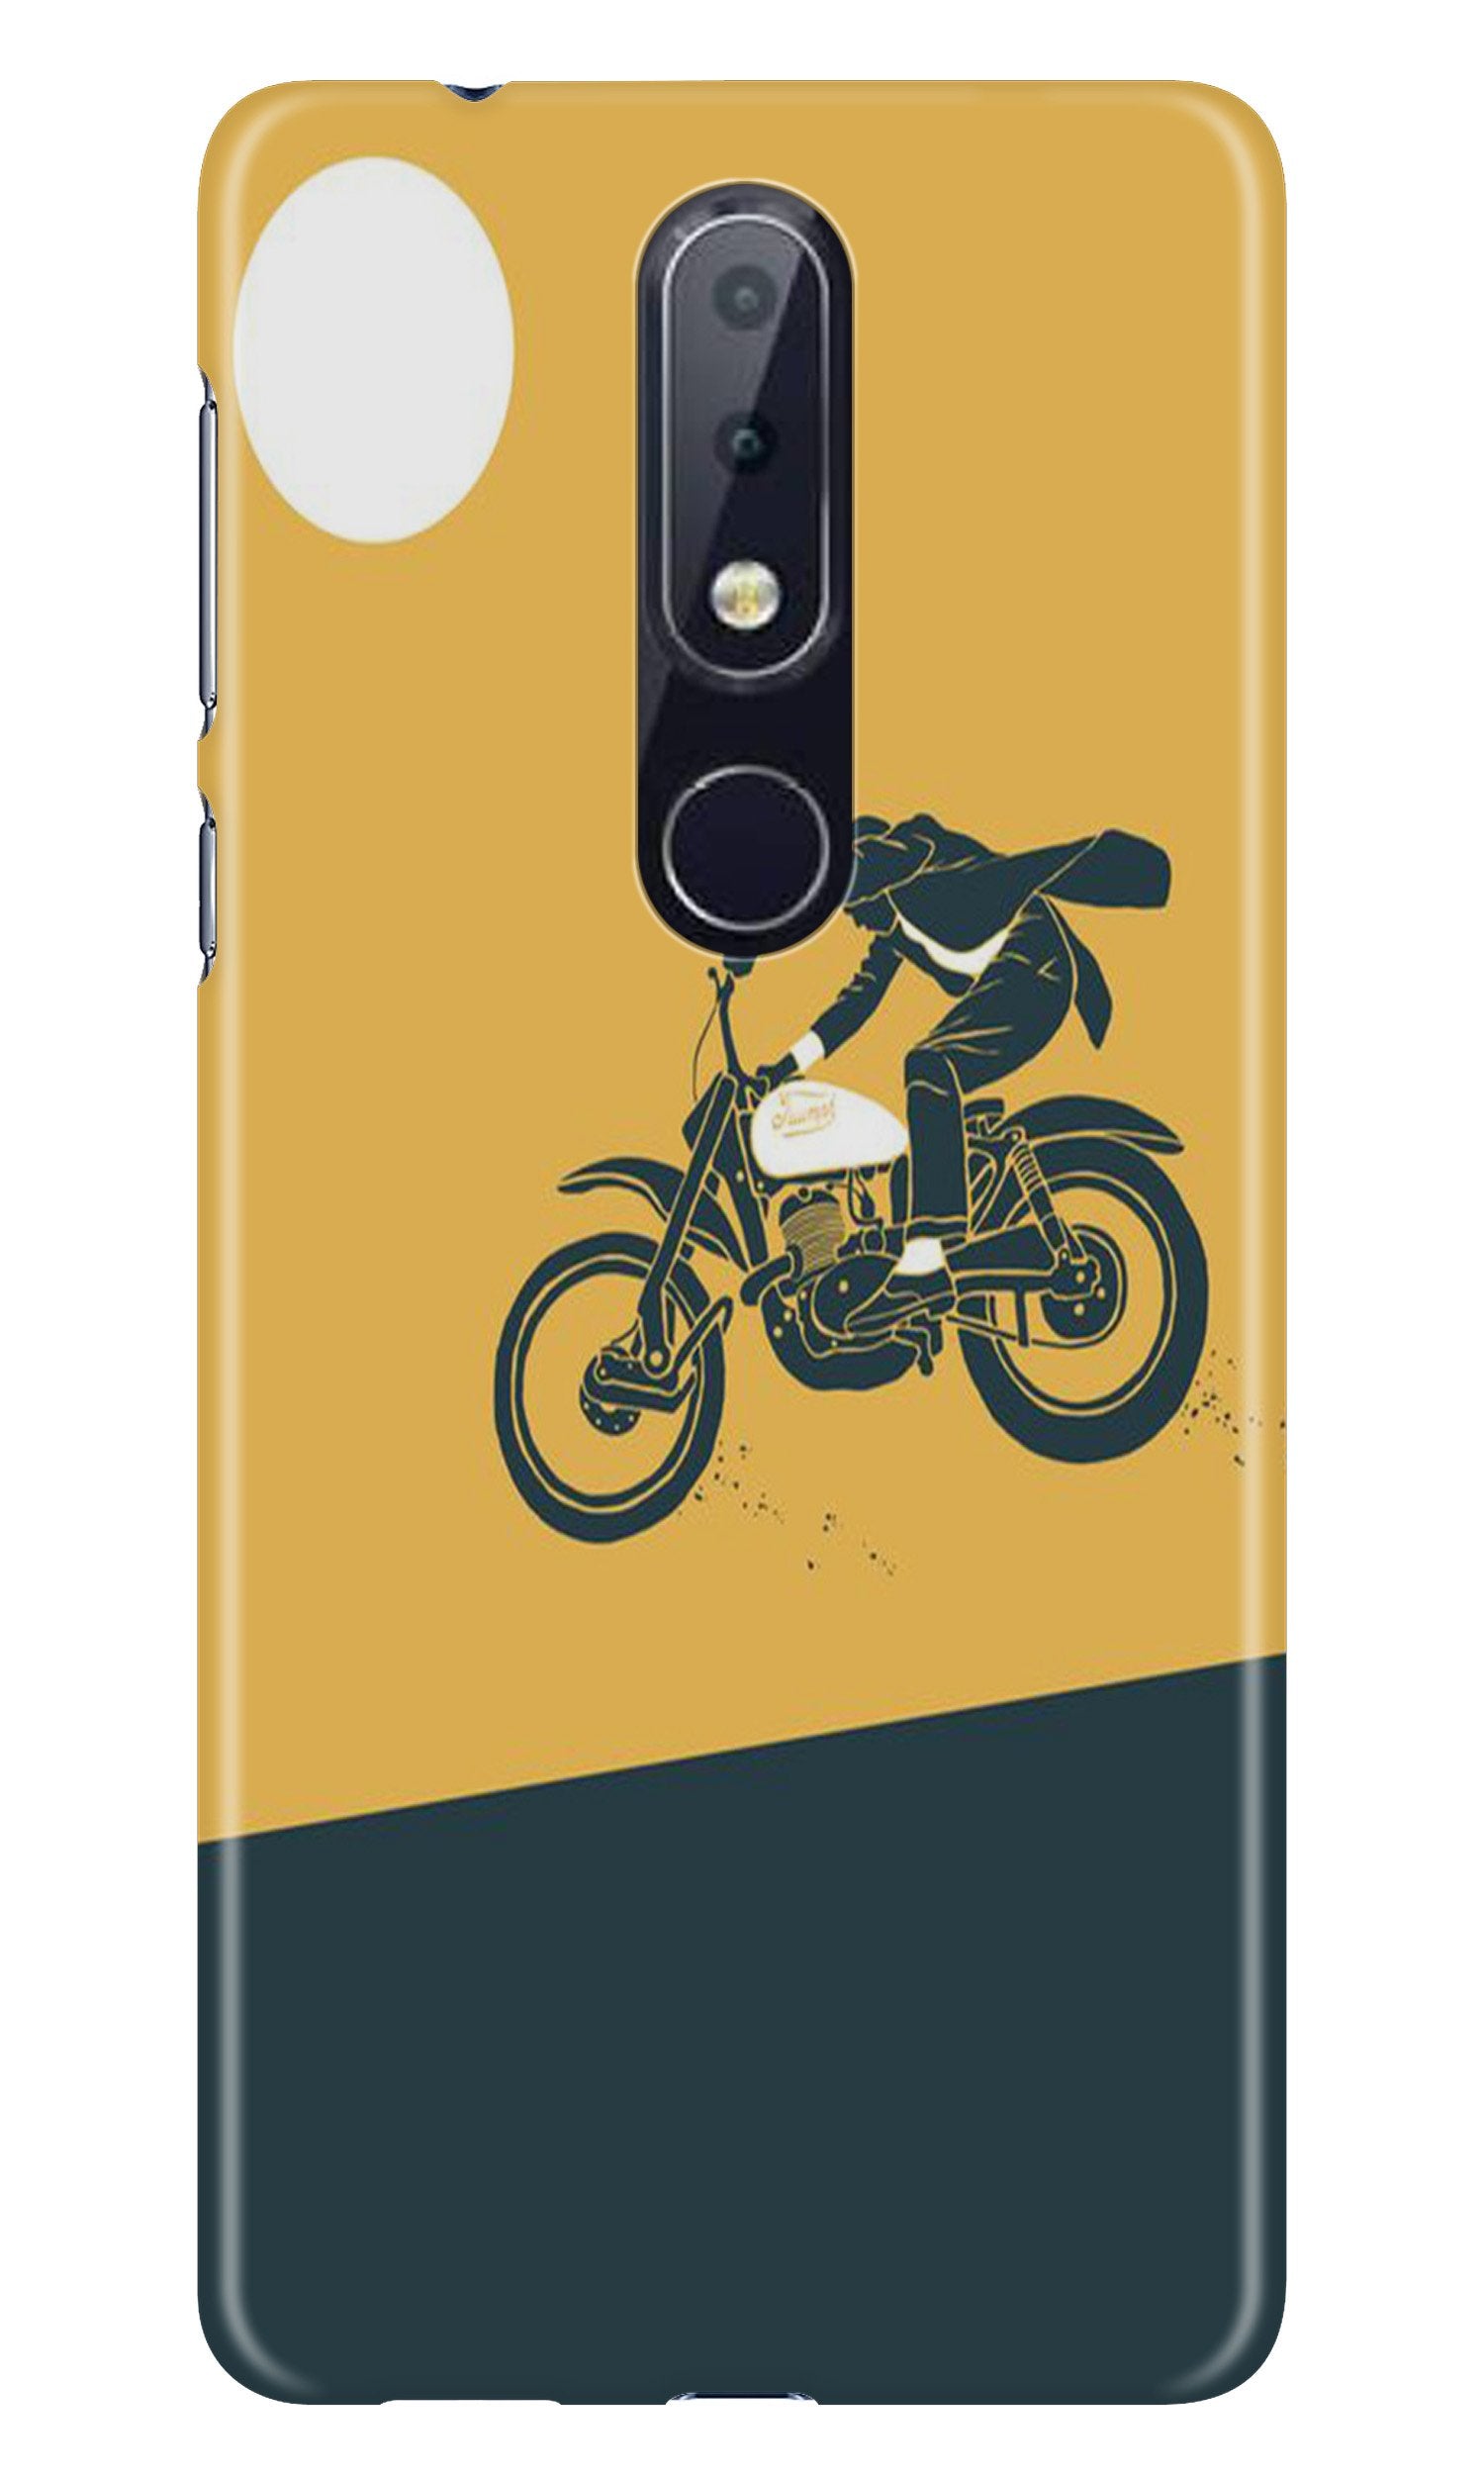 Bike Lovers Case for Nokia 4.2 (Design No. 256)